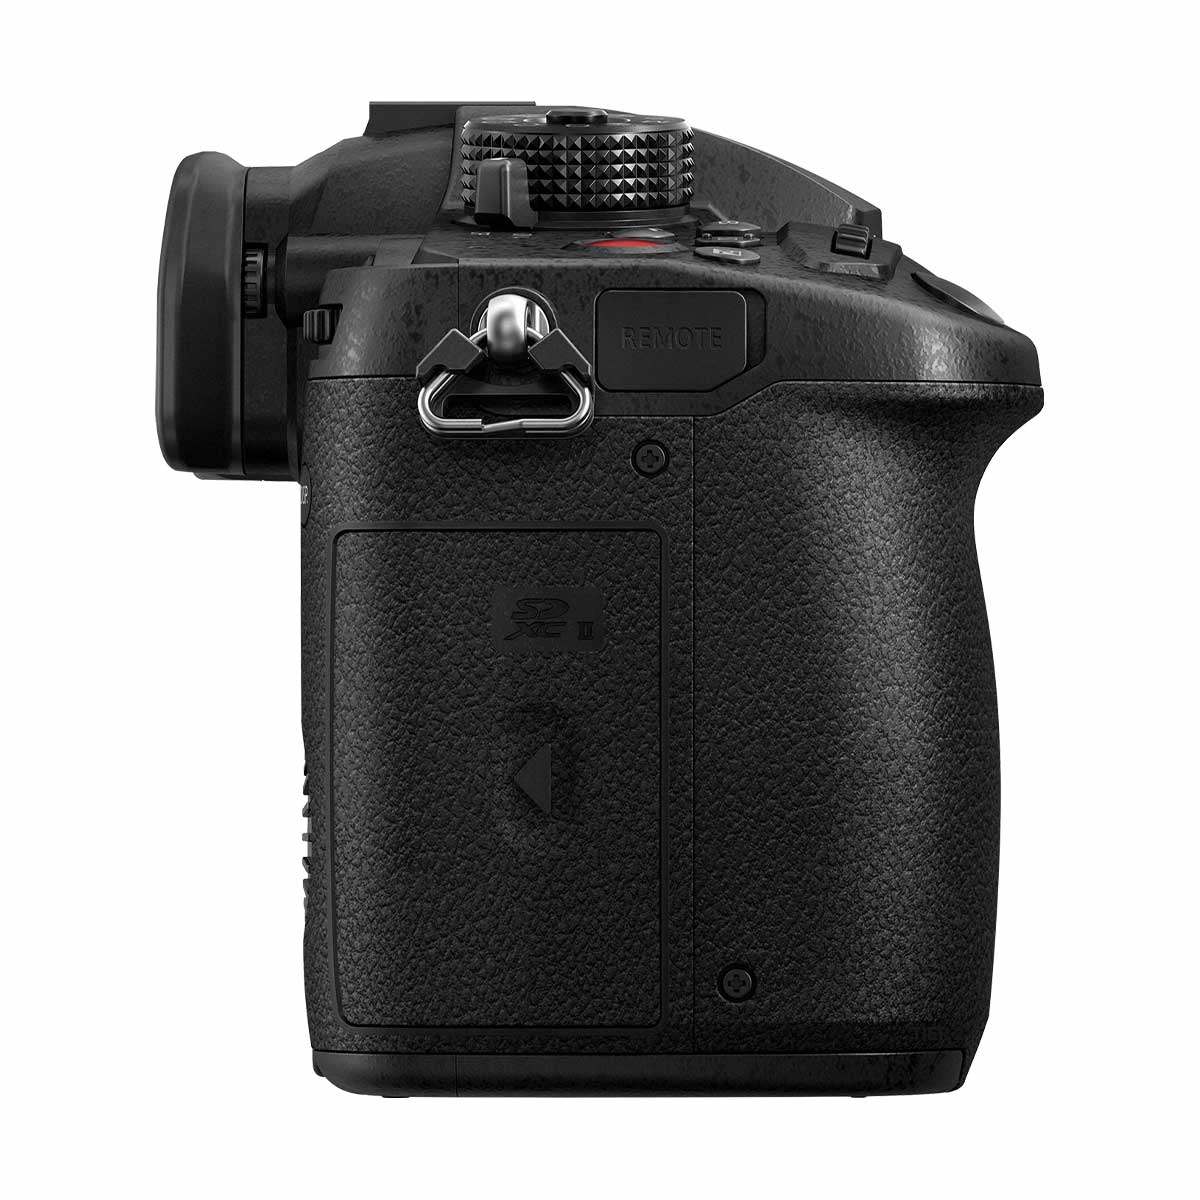 Panasonic Lumix DMC-GH5M2 Digital Camera with Leica 12-60mm Lens Kit